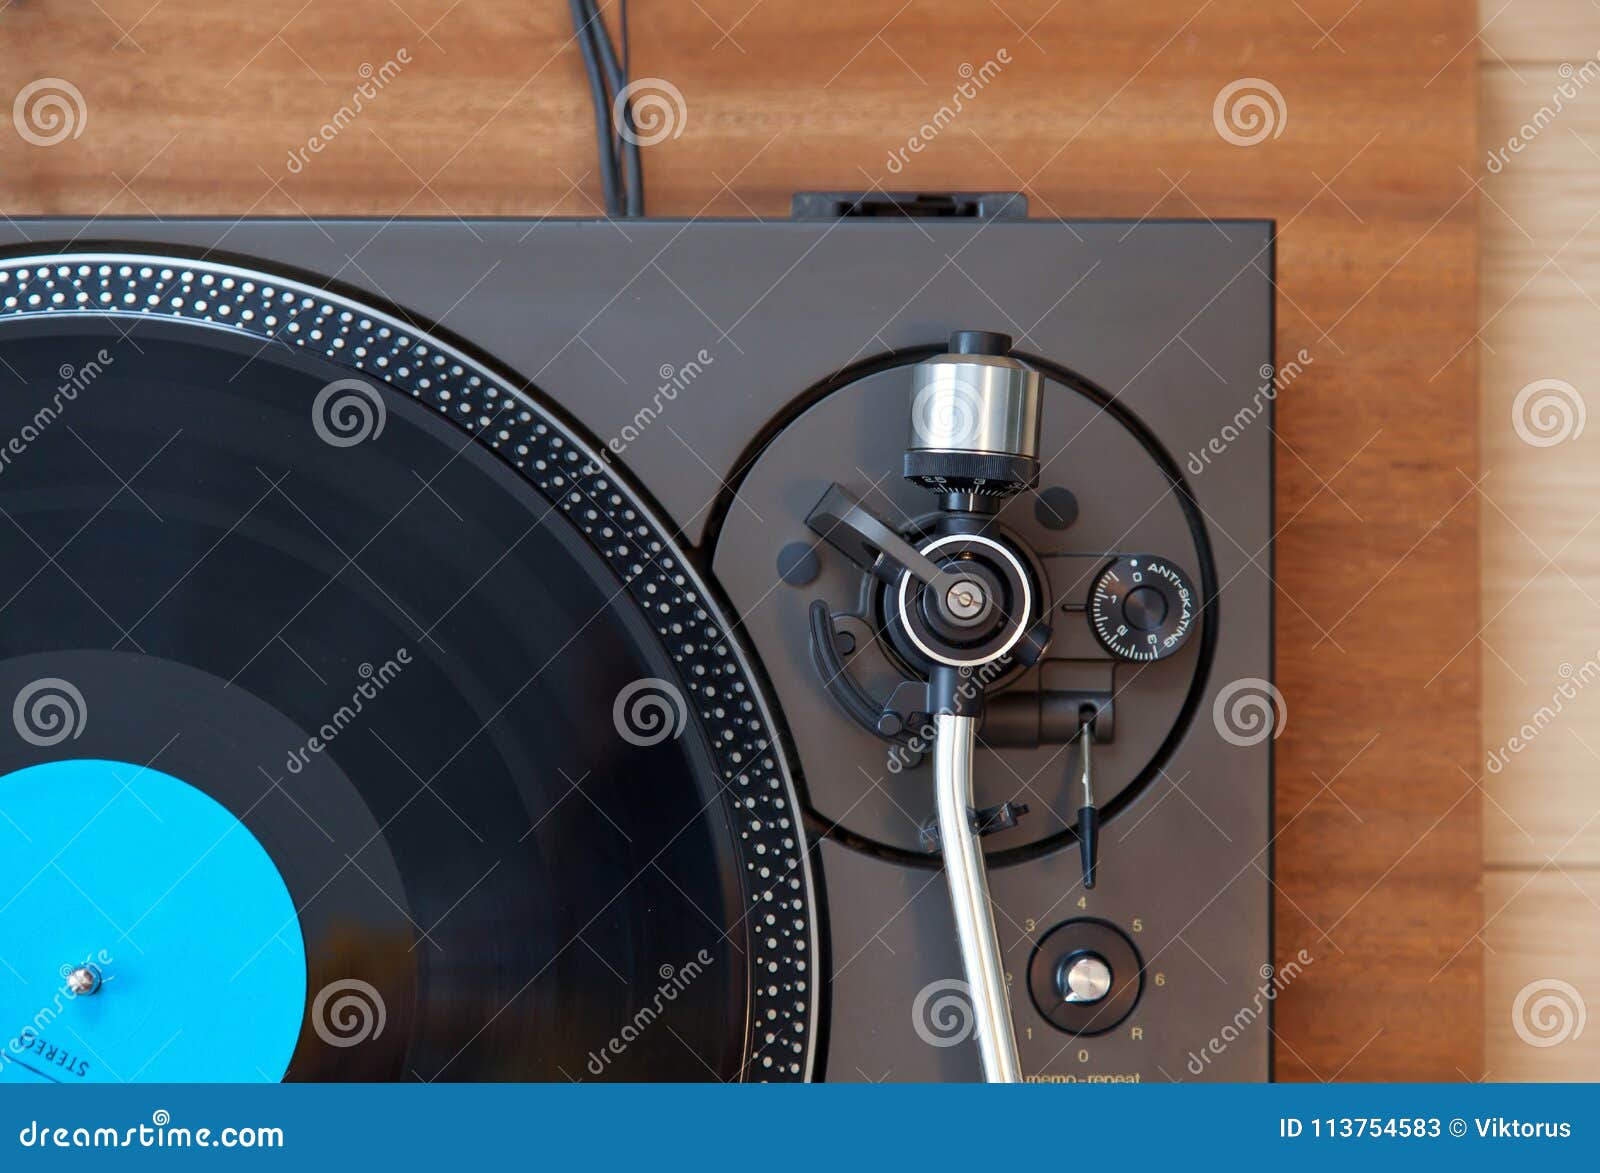 vintage record turntable player tonearm mechanism